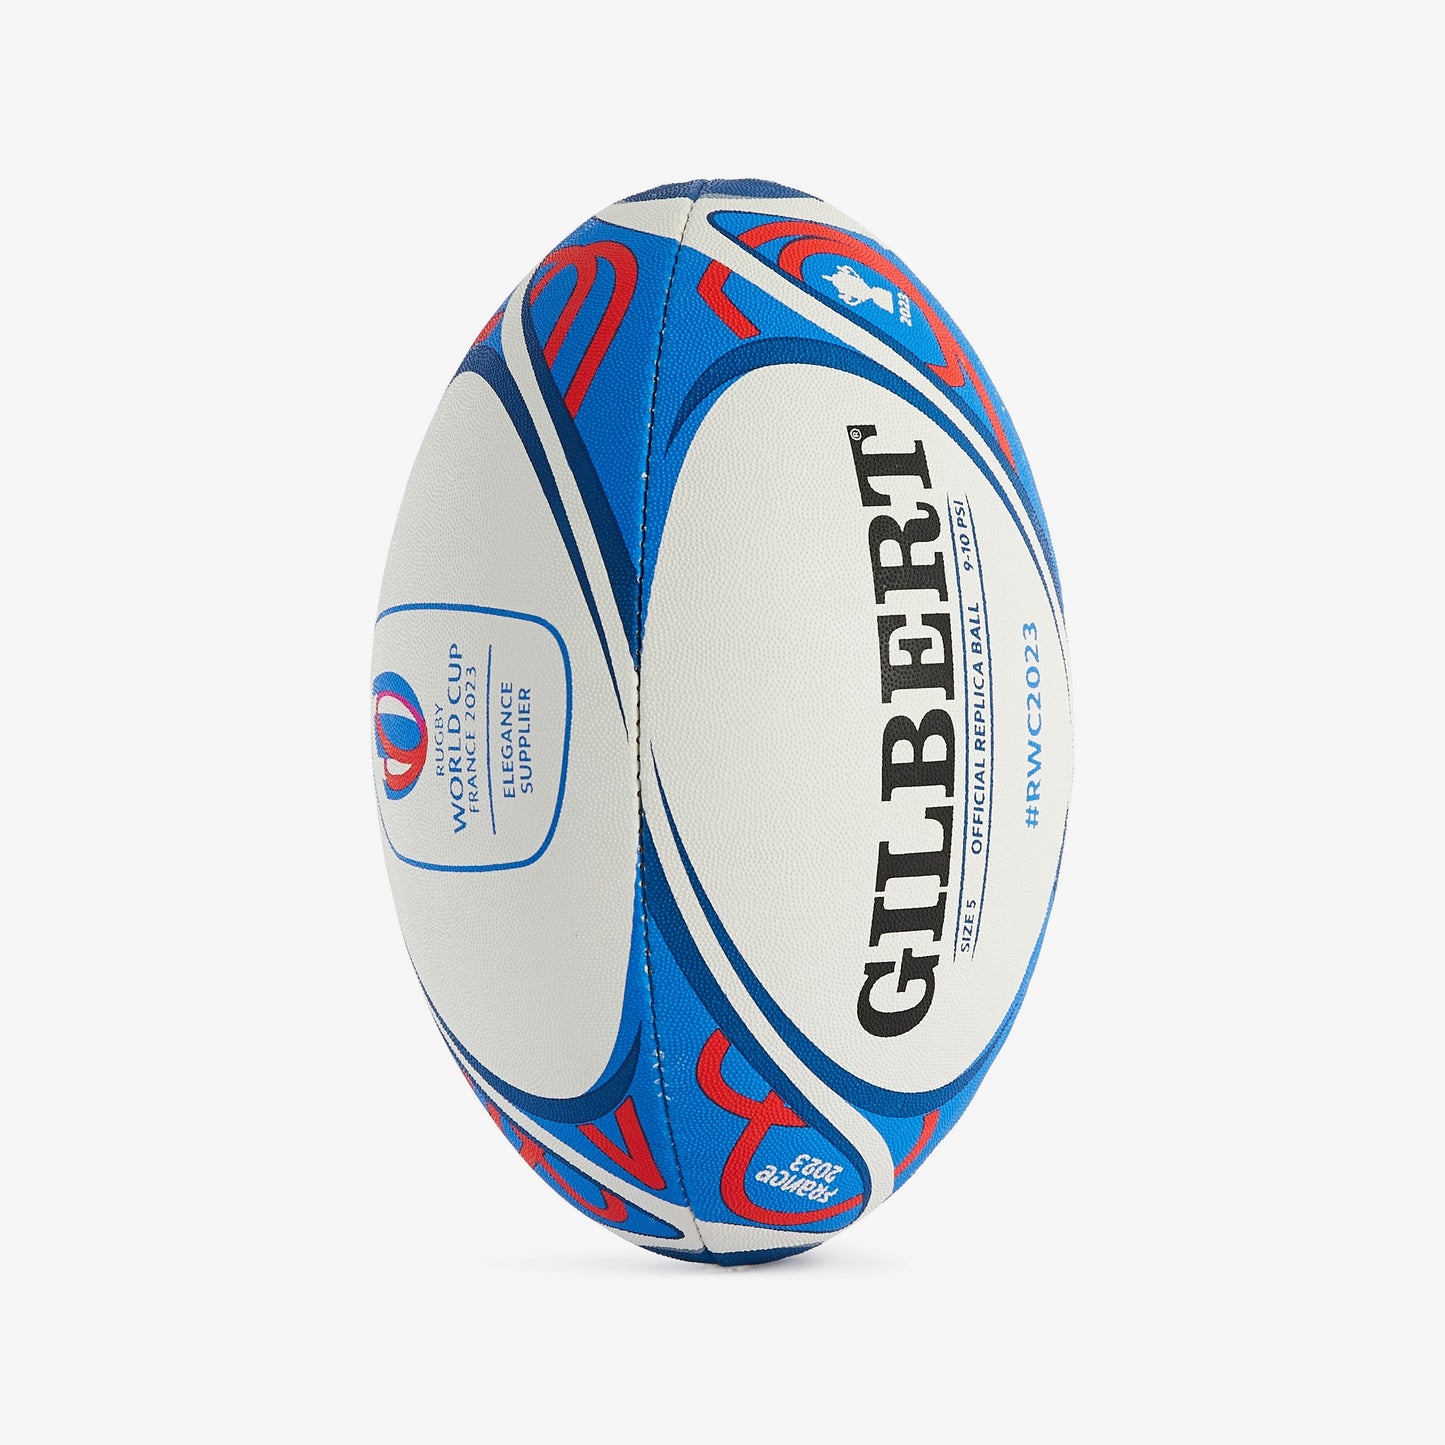 Ballon de Rugby Gilbert Coupe du Monde 2023 France GILBERT